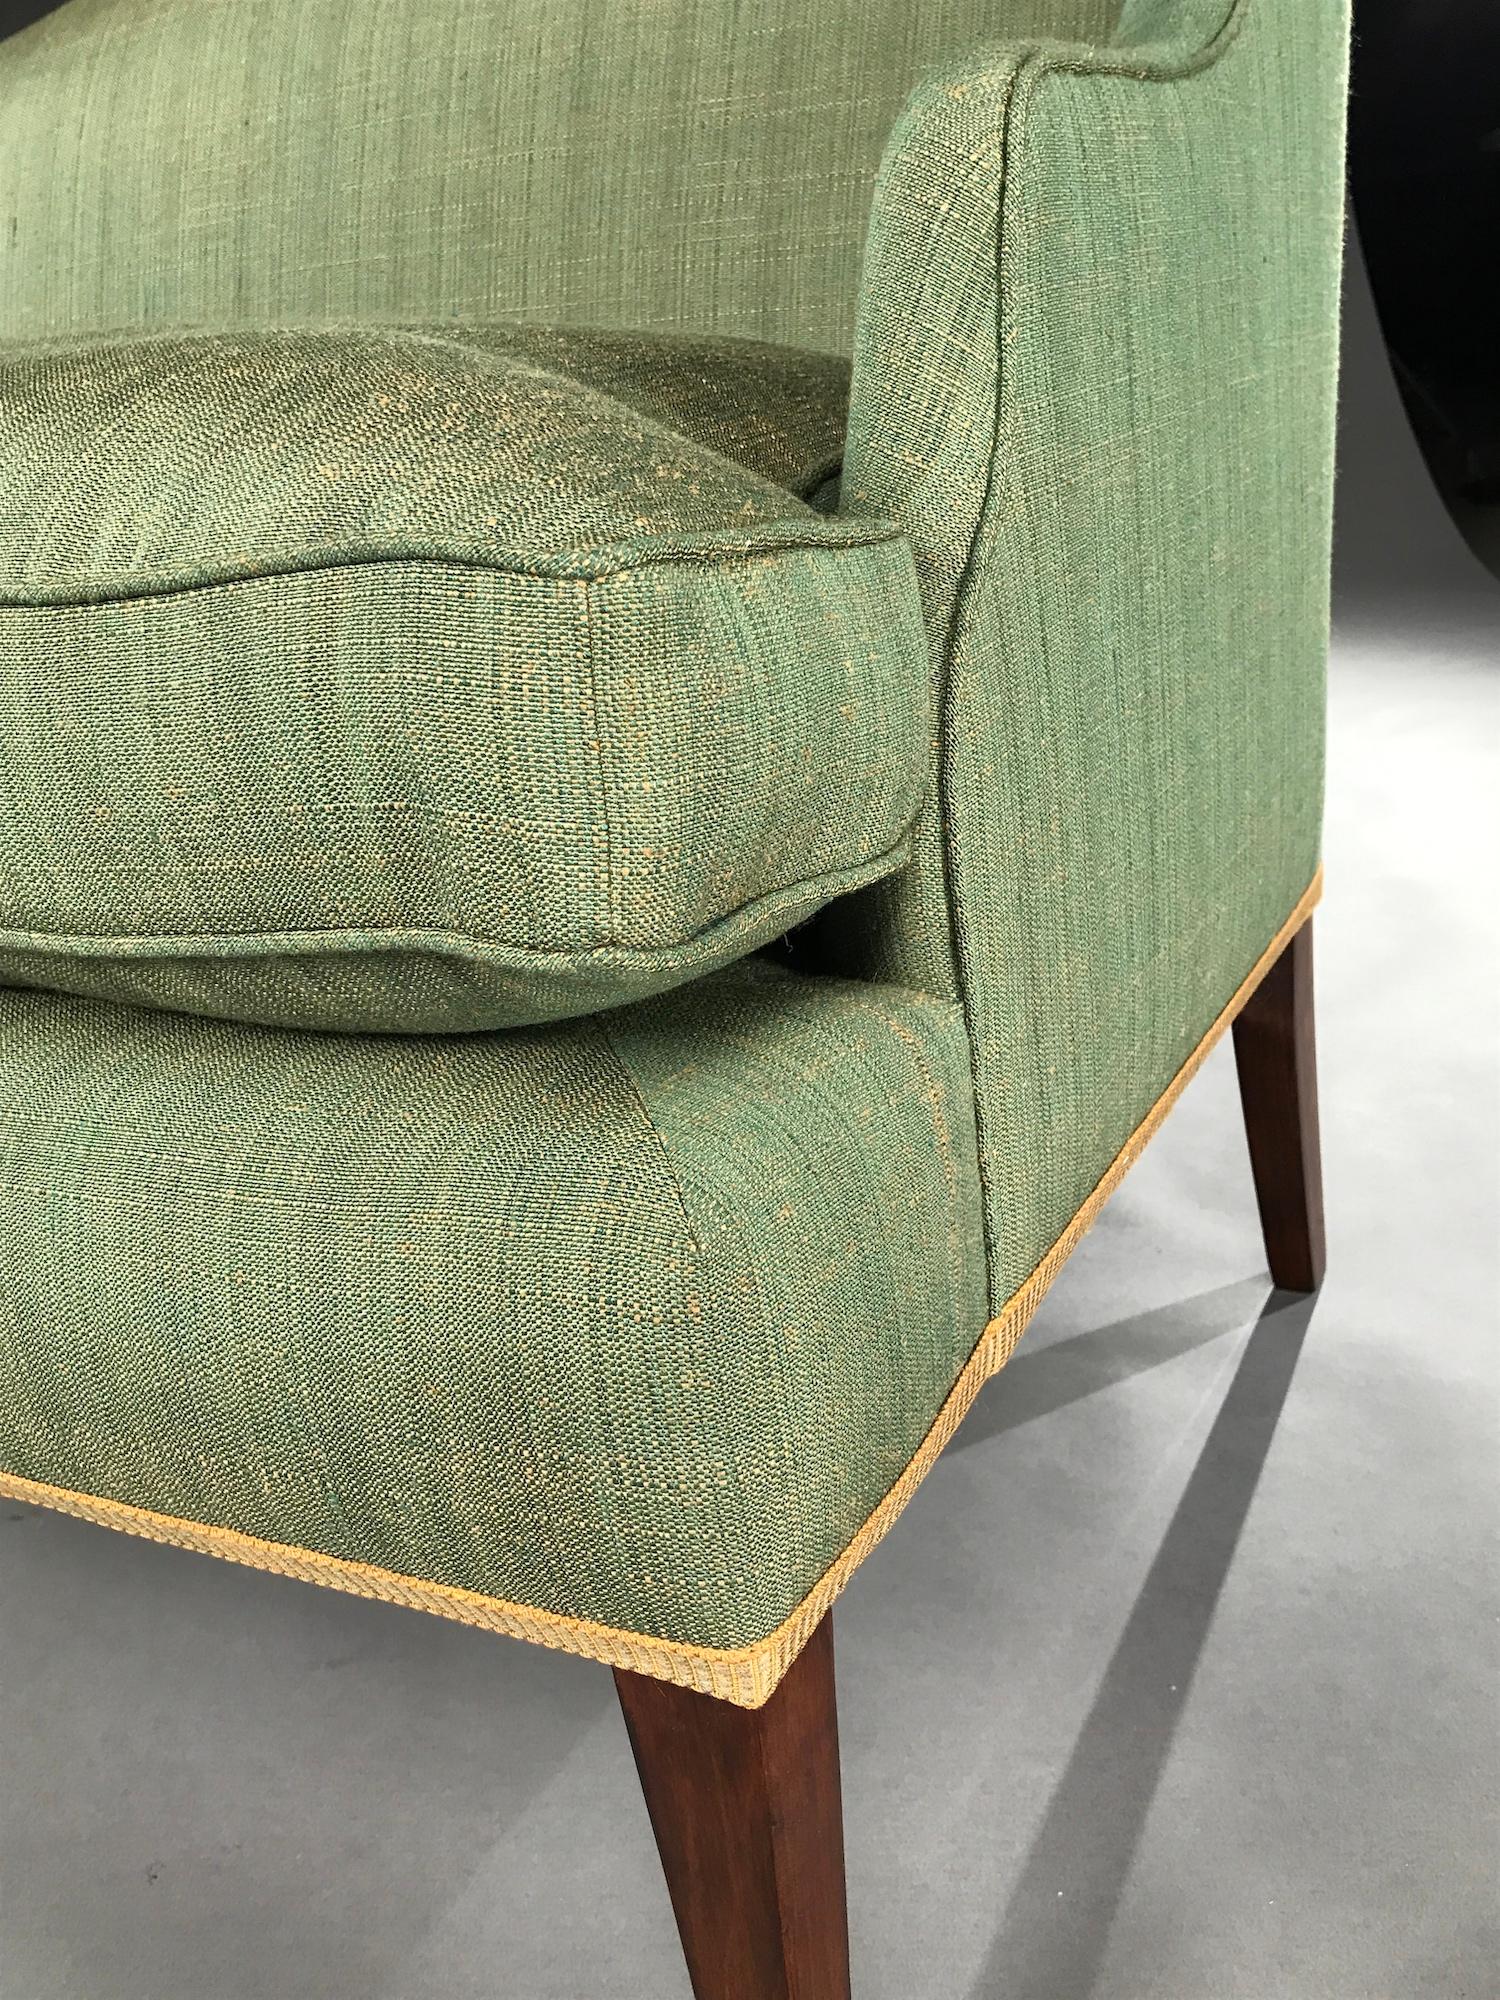 Neoclassical Revival Settee Sofa Love Seat Pair Green Gold Linen American 2-Seater Petite Wide